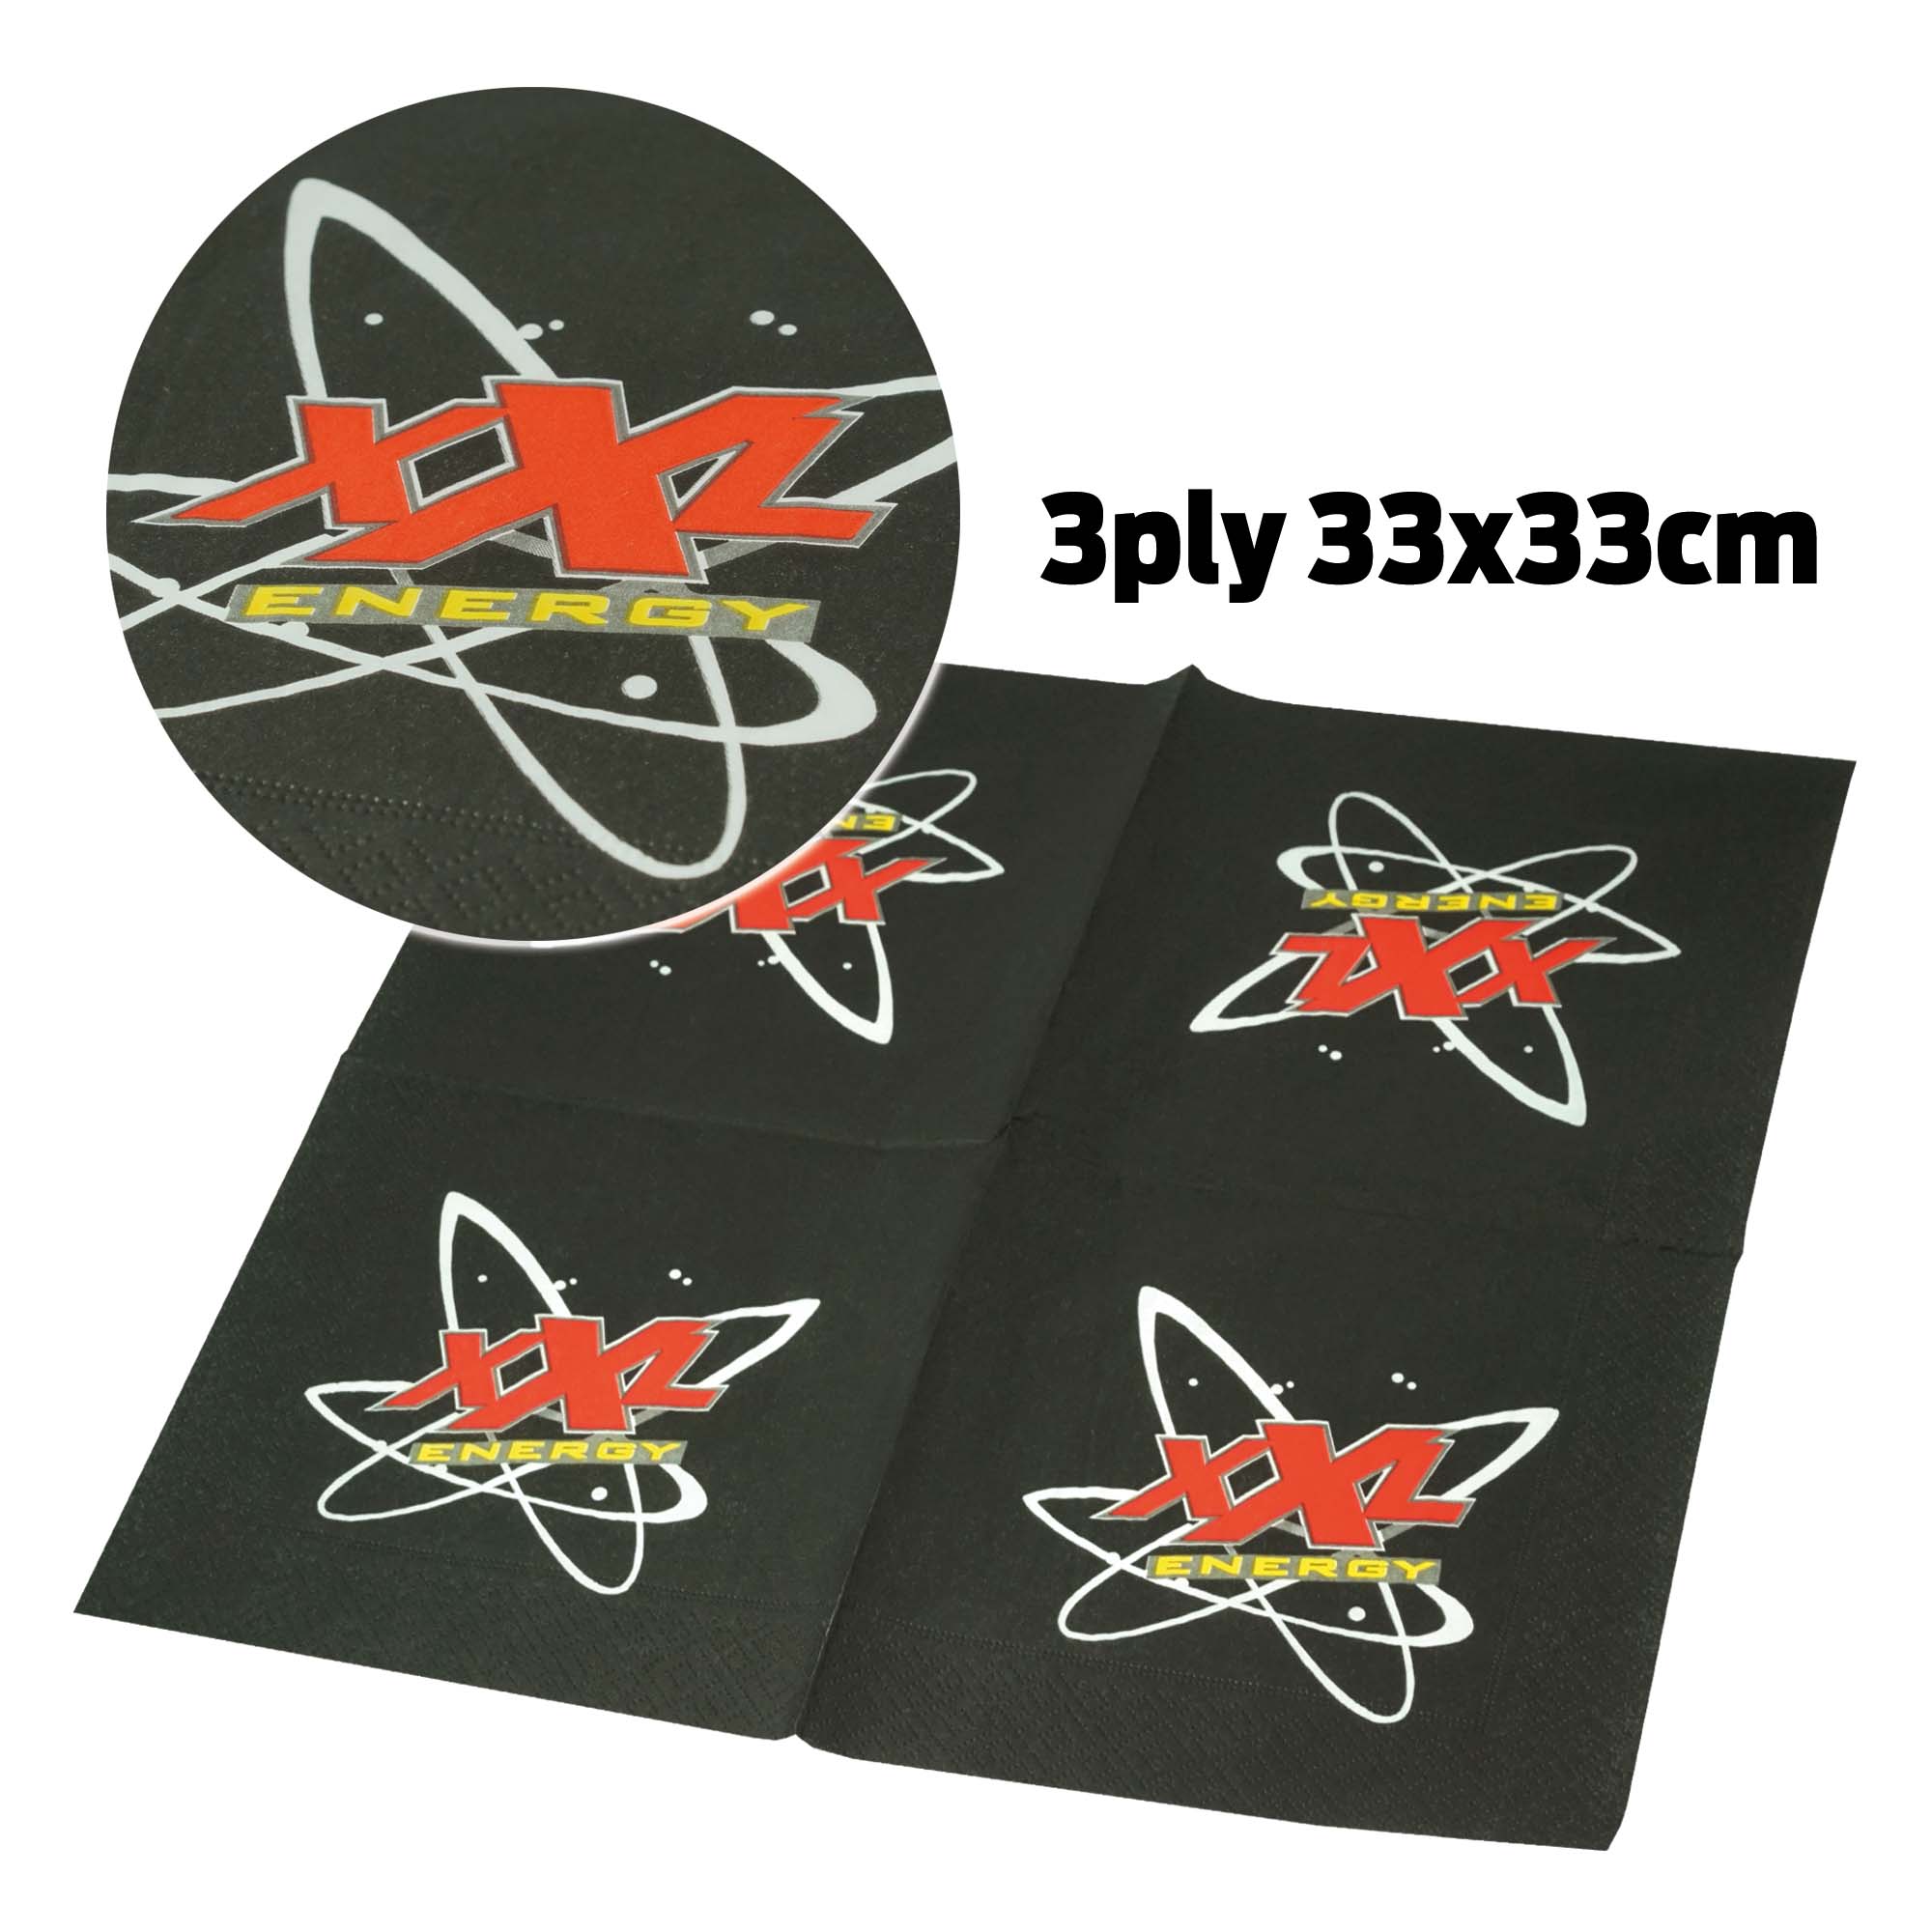 Full Coverage Paper Napkin 3Ply (33X33cm)